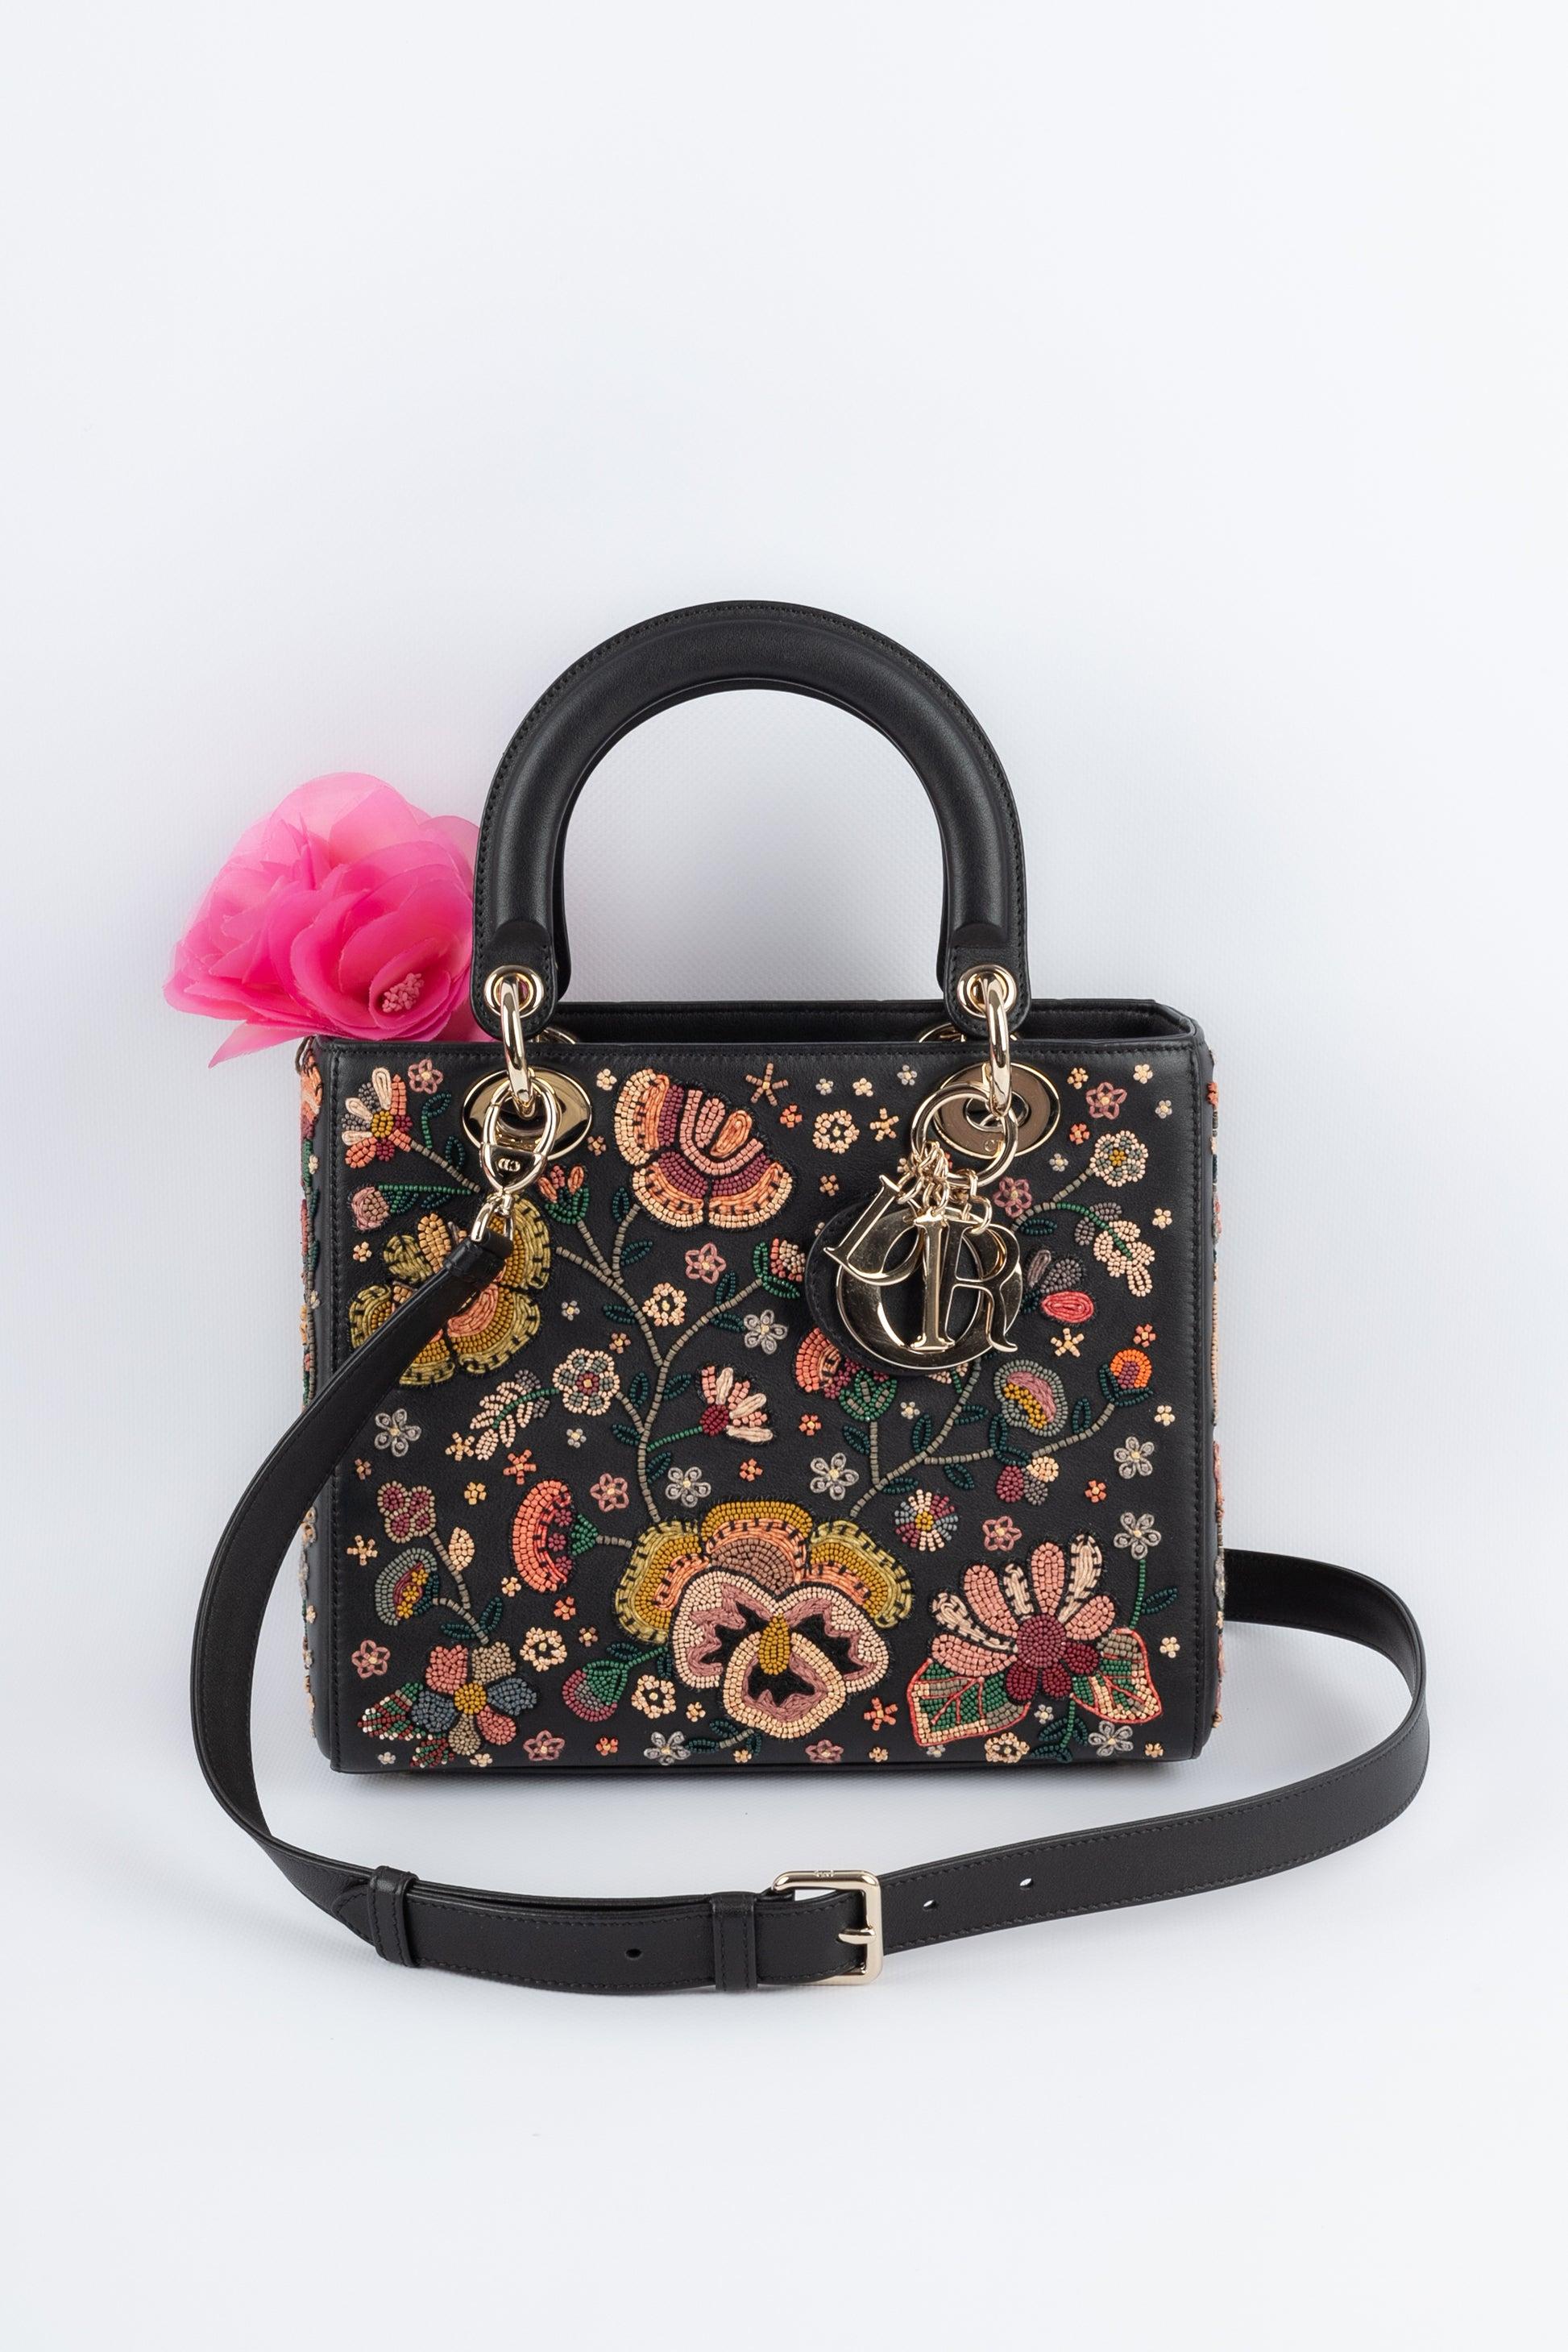 Lady Dior Black Leather Bag, 2019 For Sale 6